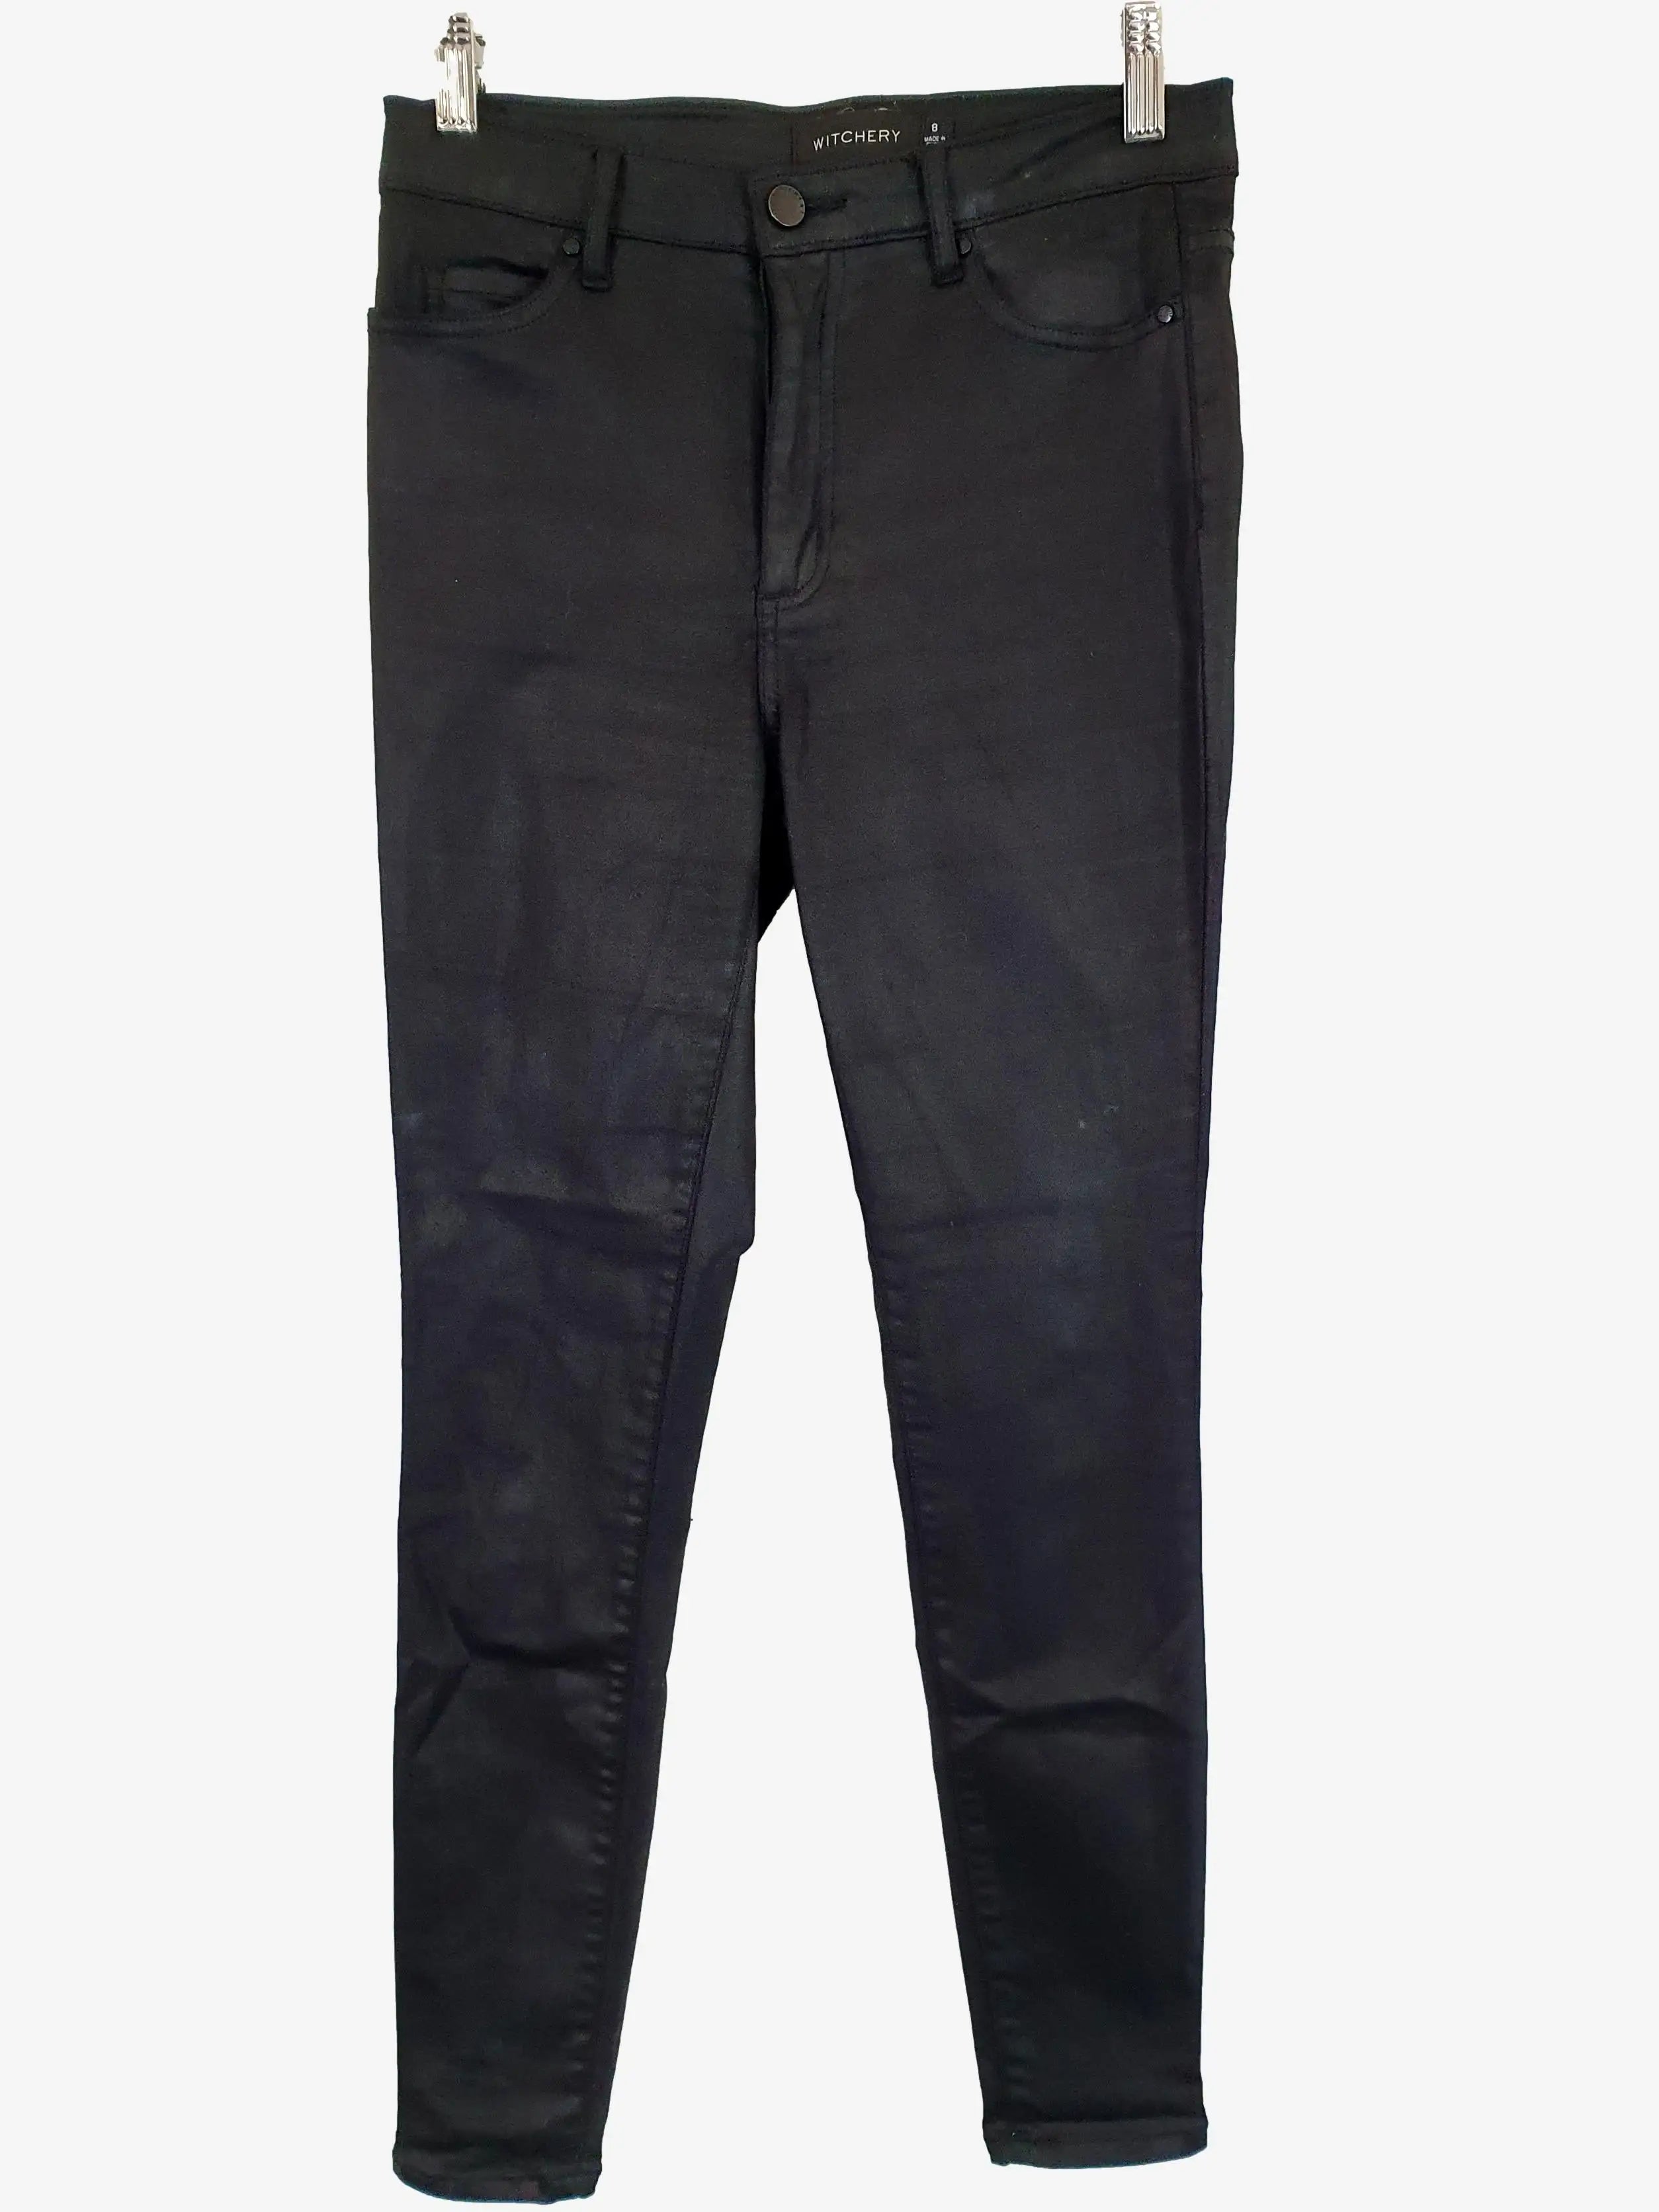 Witchery - Black leather pants on Designer Wardrobe